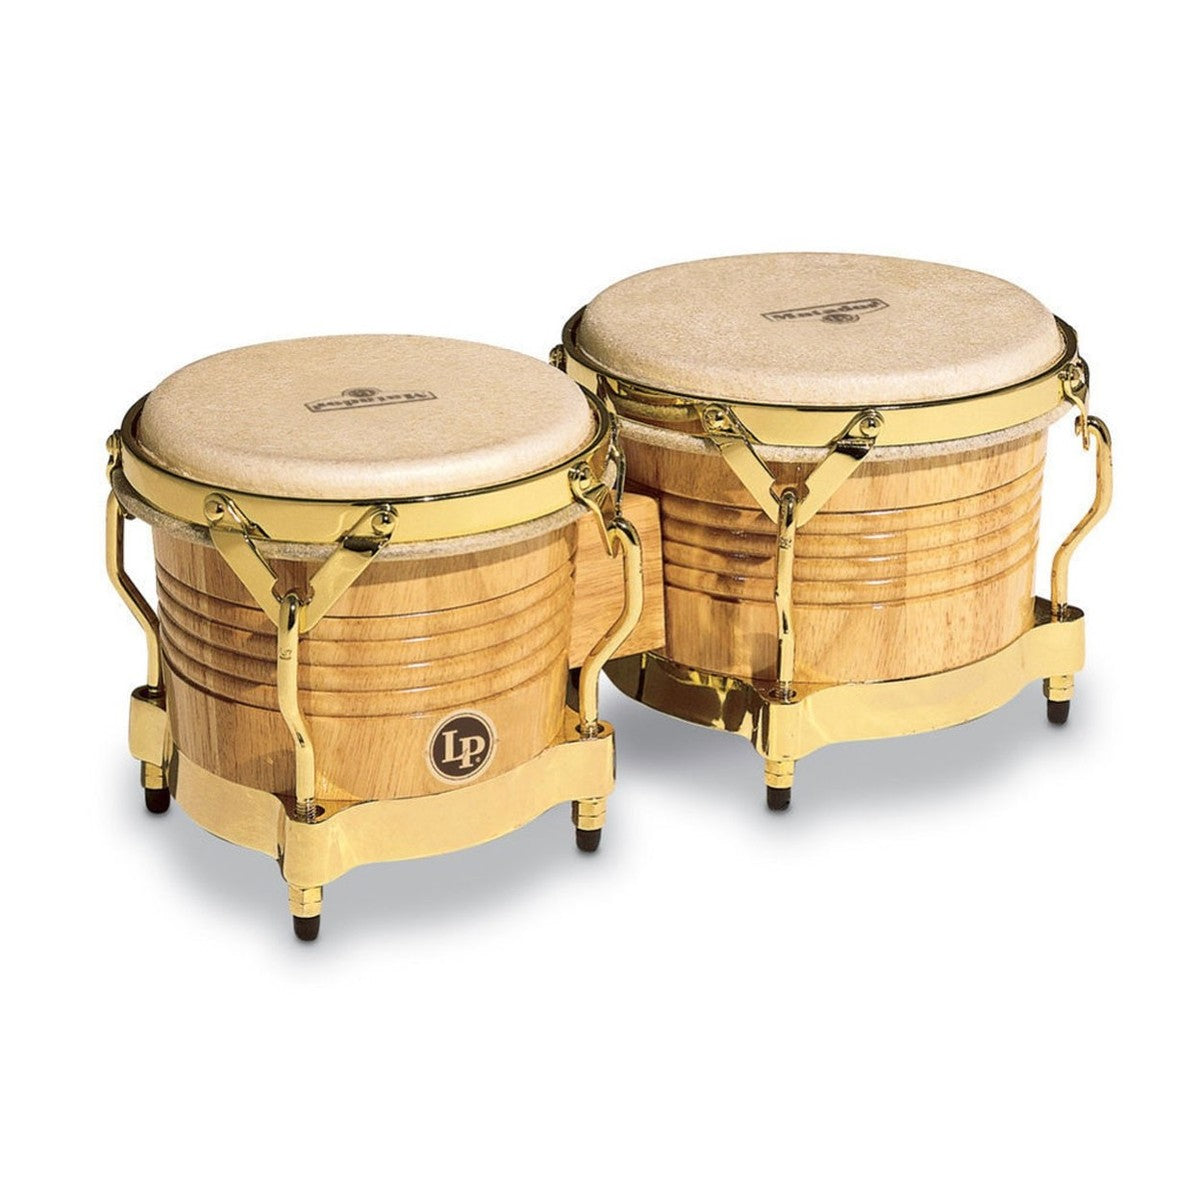 LP Percussion Matador M201-AW Wood Bongos in Natural/Gold